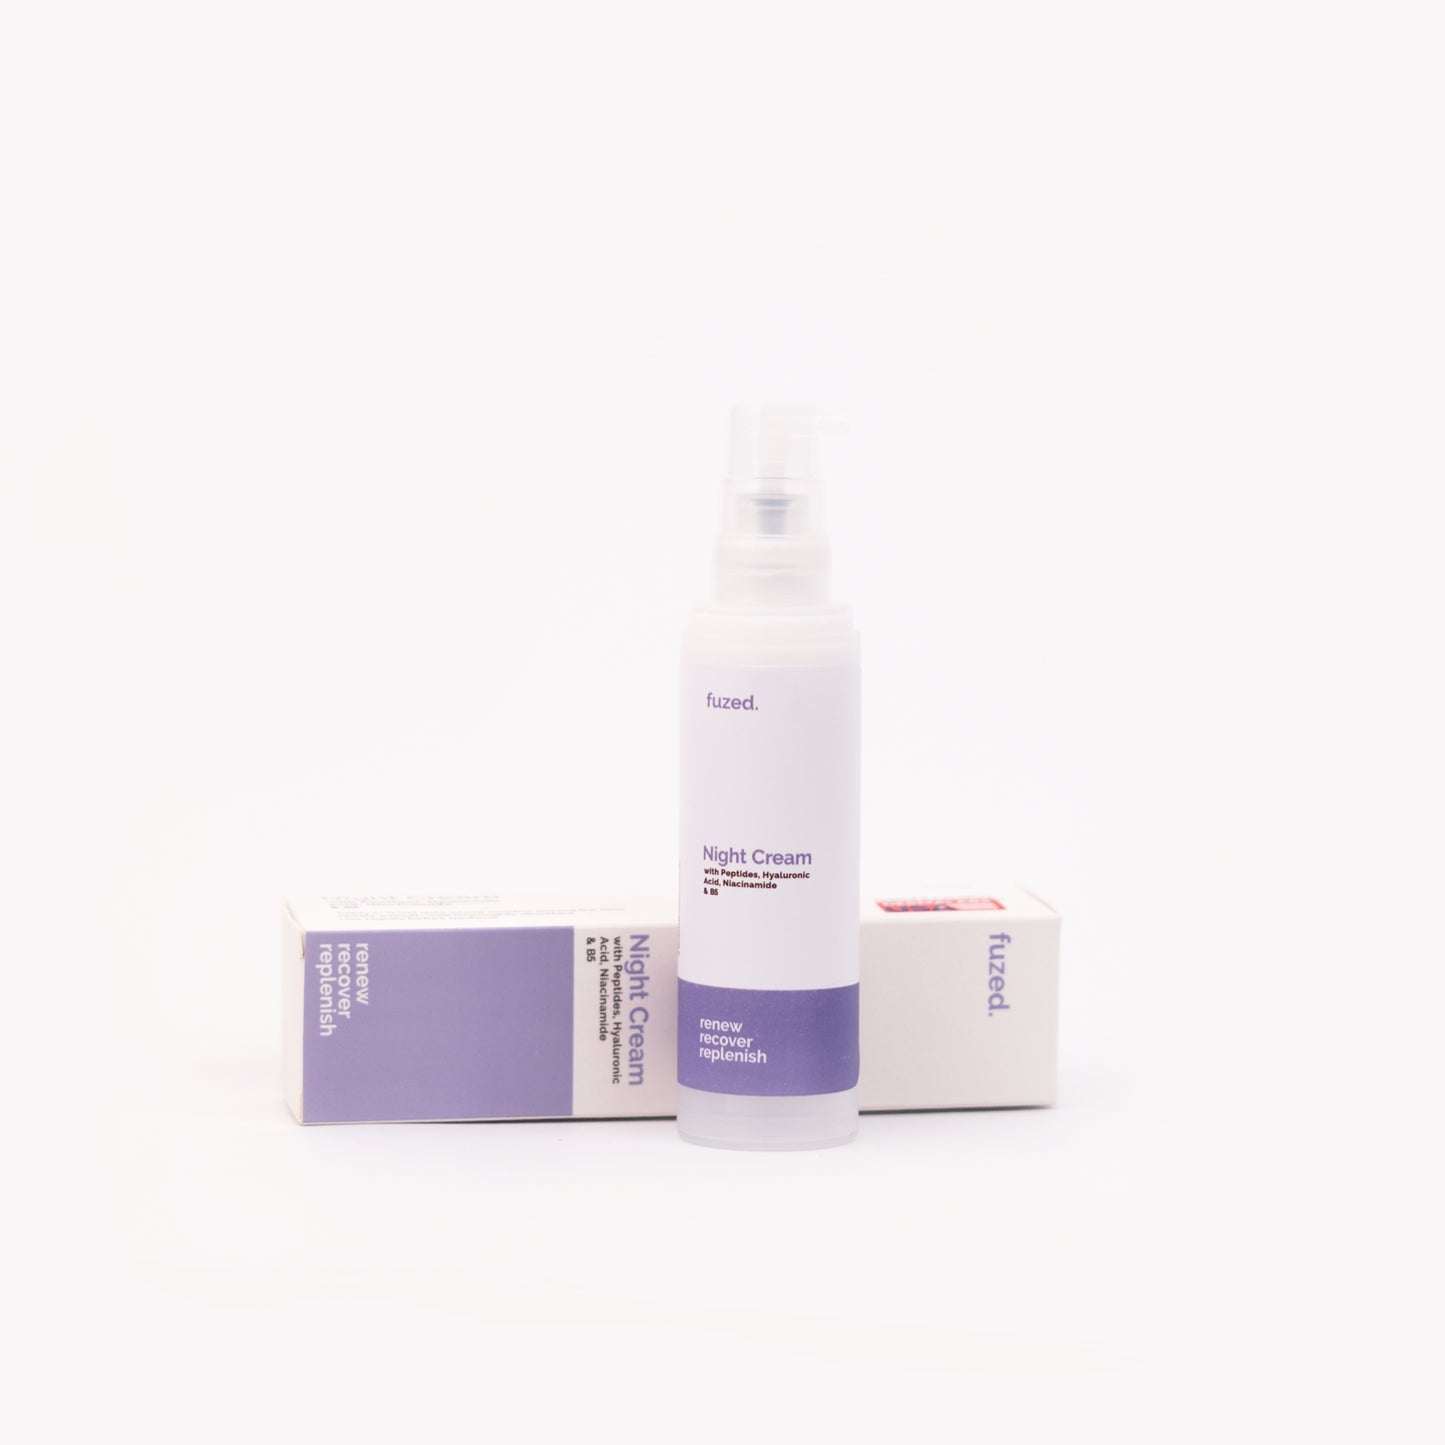 Night Cream with Niacinamide, Hyaluronic Acid, Peptides & B5 - Fuzed Skincare